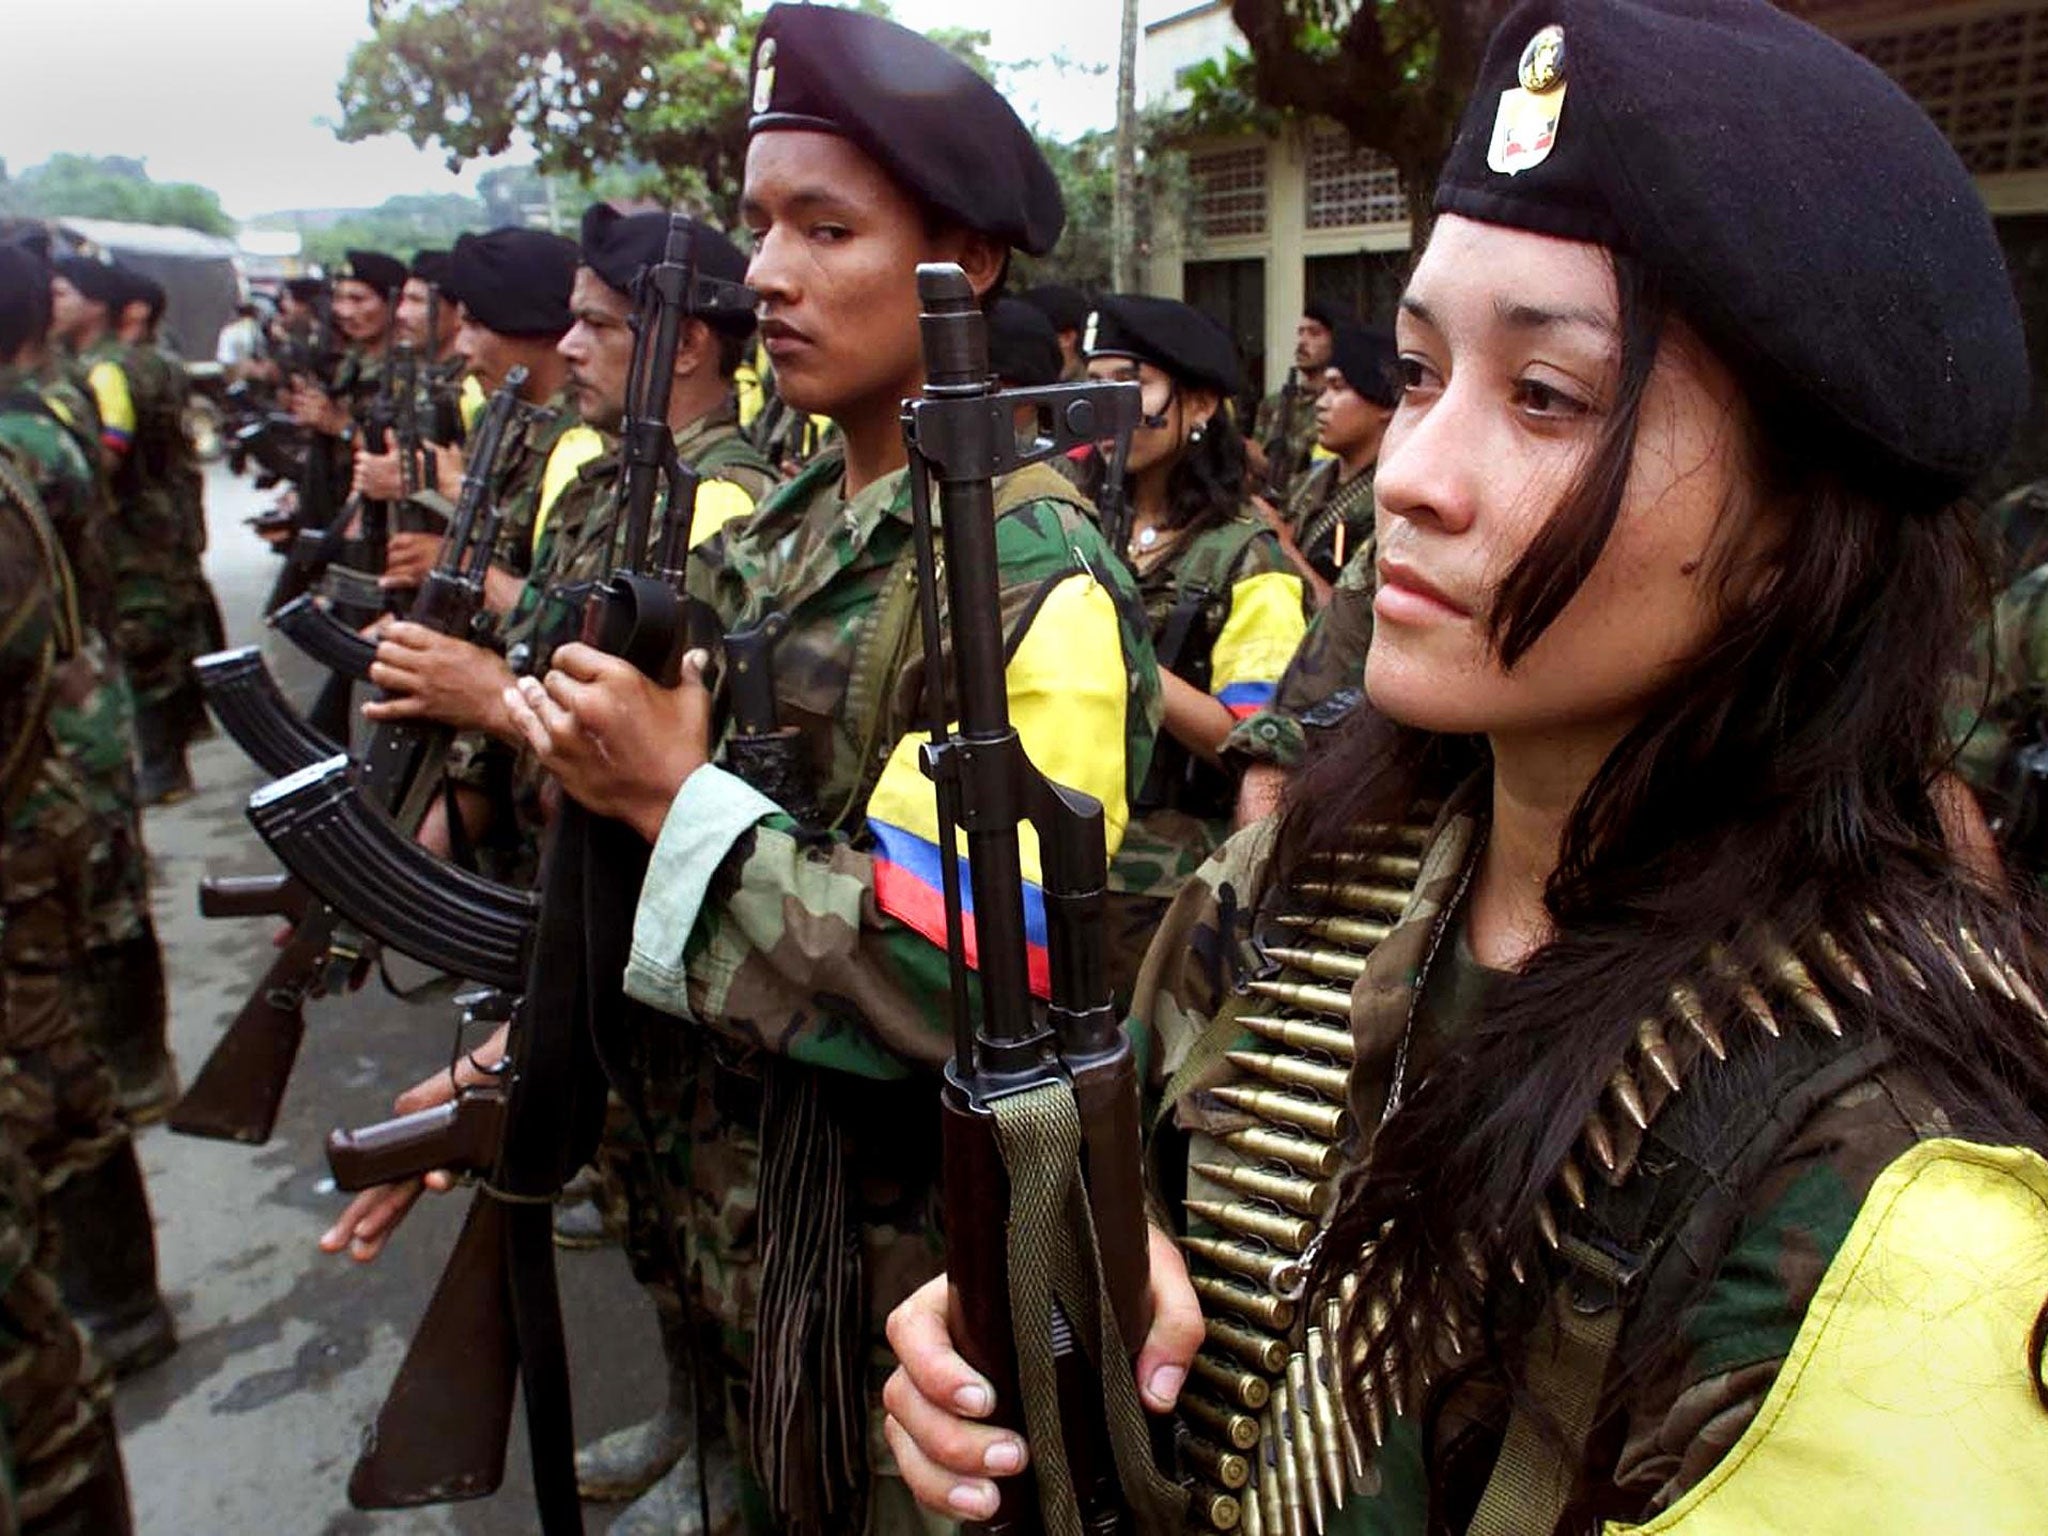 Rebel army: FARC guerrillas on parade in San Vicente, Colombia